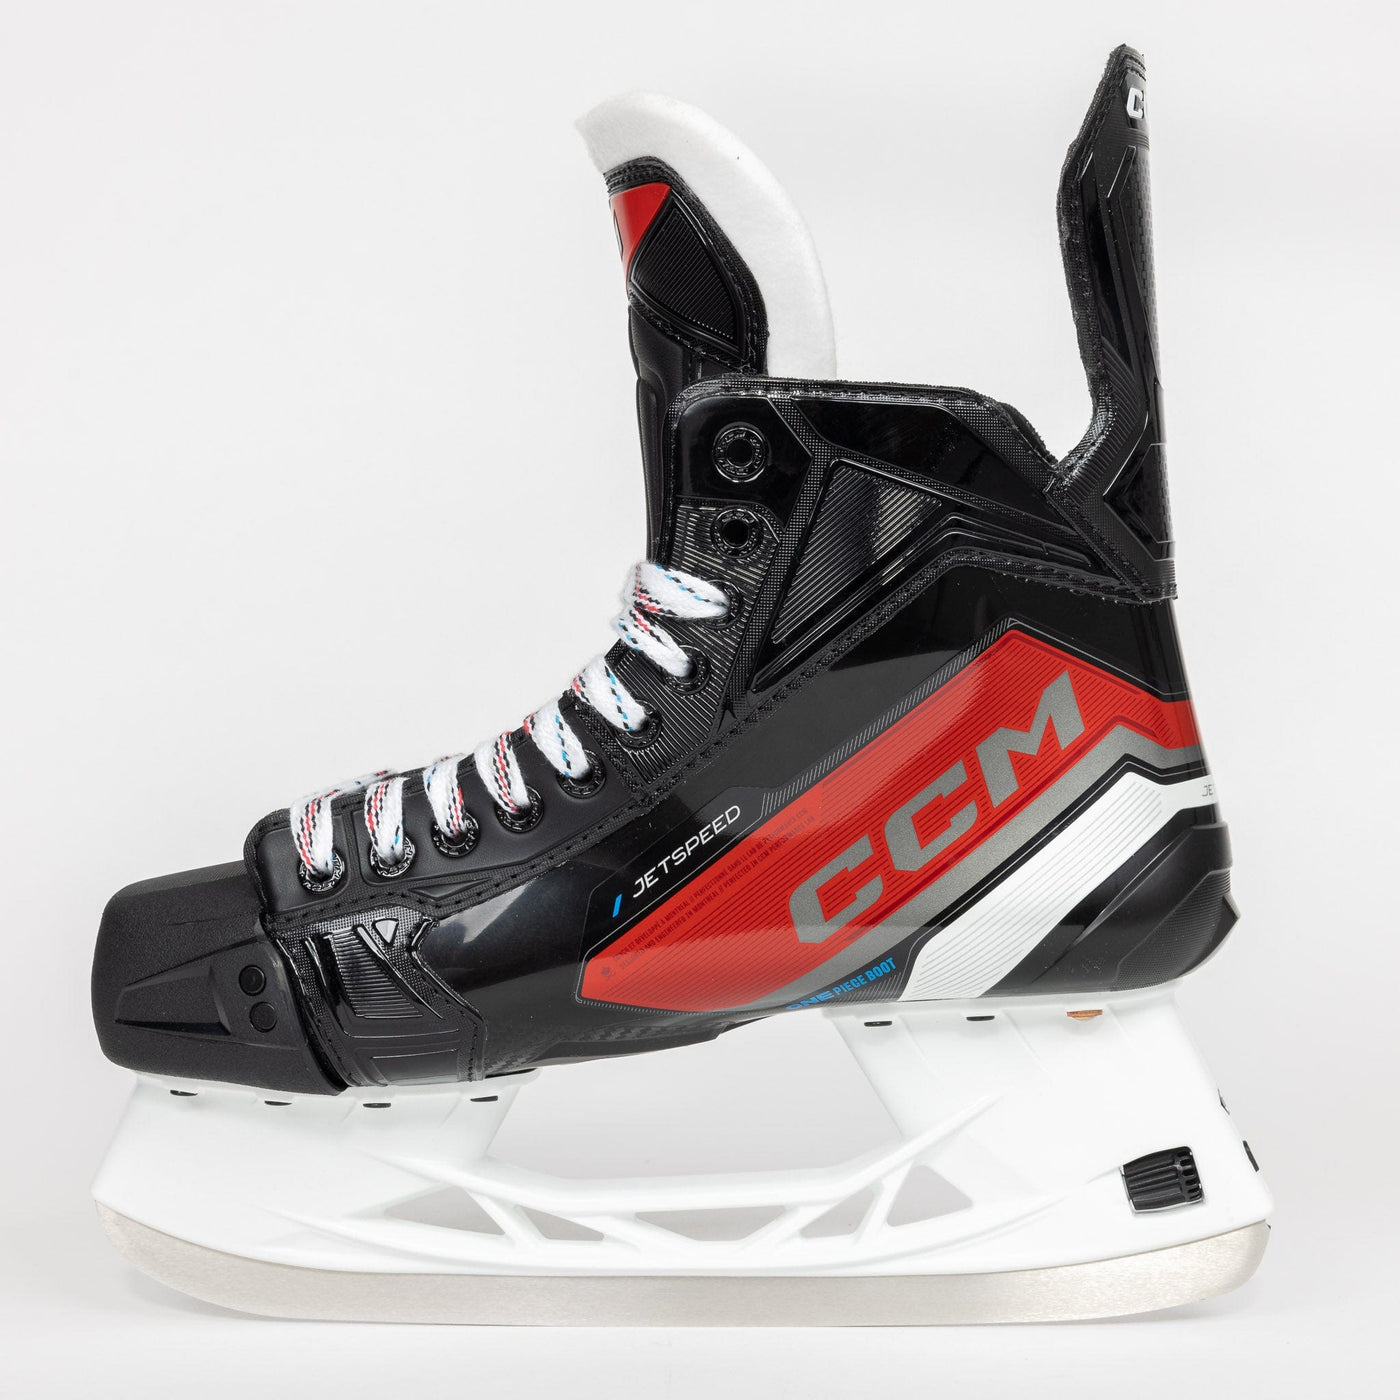 CCM Jetspeed FT670 Intermediate Hockey Skates - The Hockey Shop Source For Sports